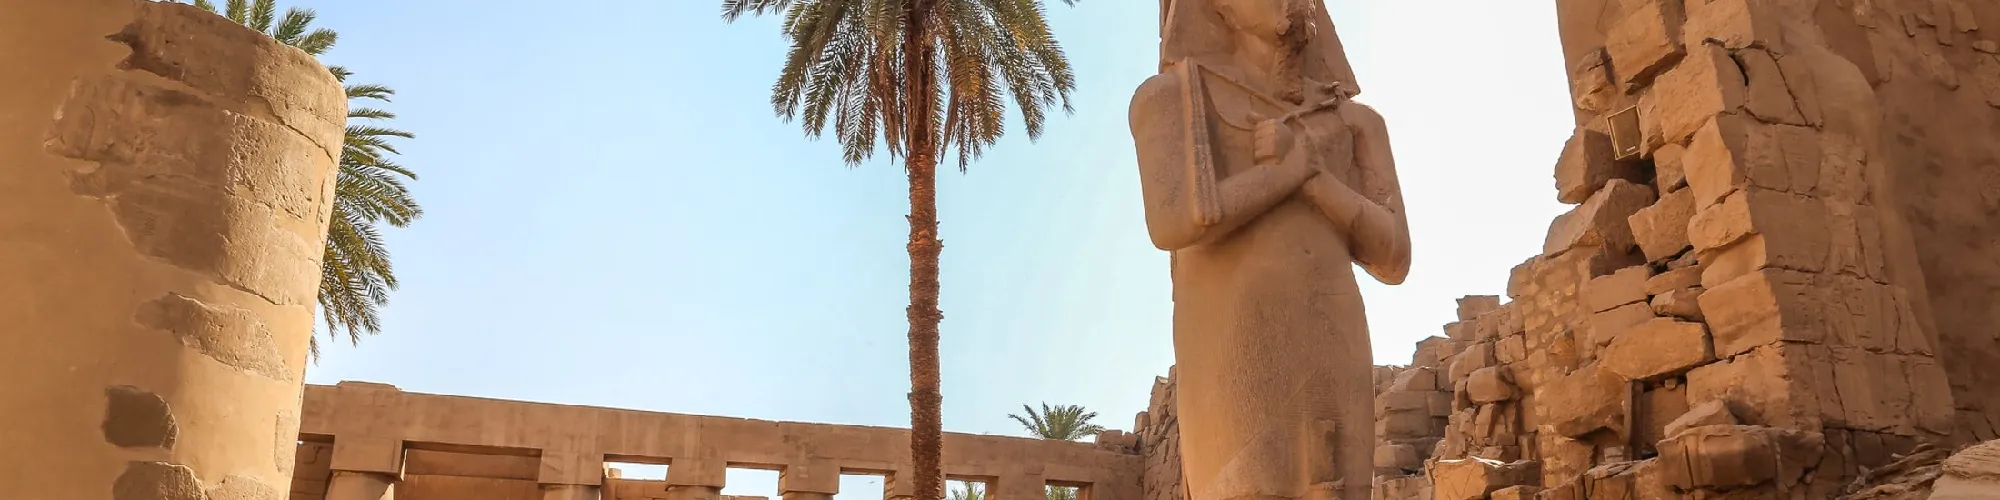 Hotels in Ägypten background image